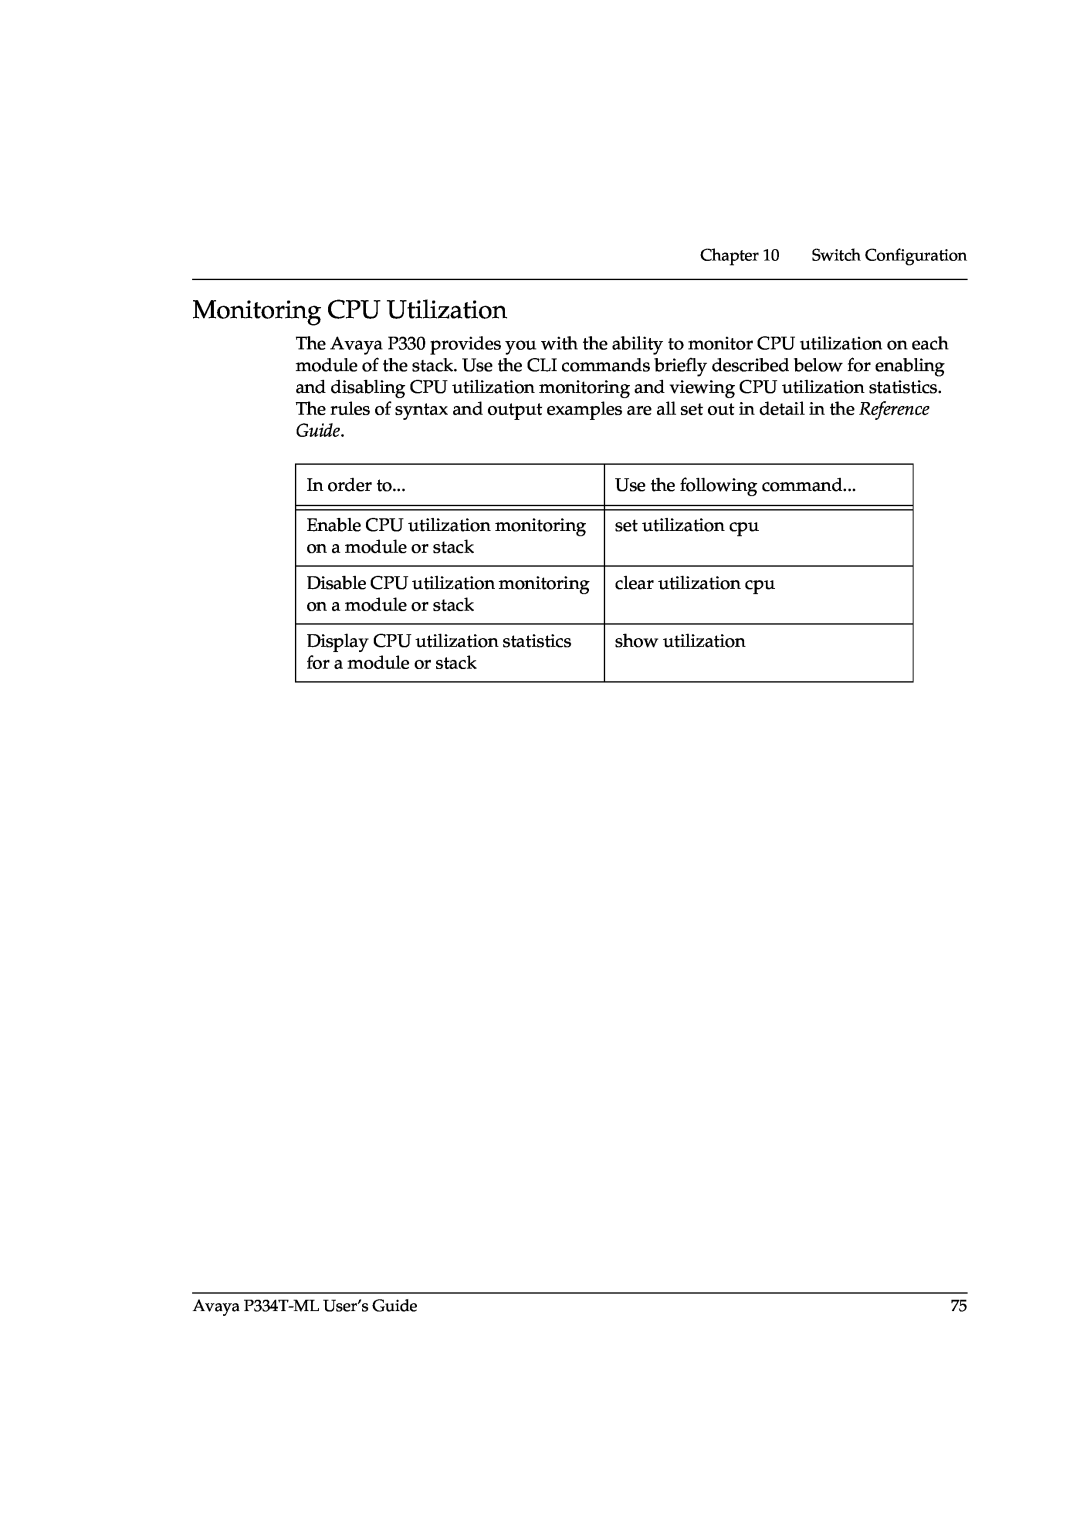 Avaya P3343T-ML manual Monitoring CPU Utilization 